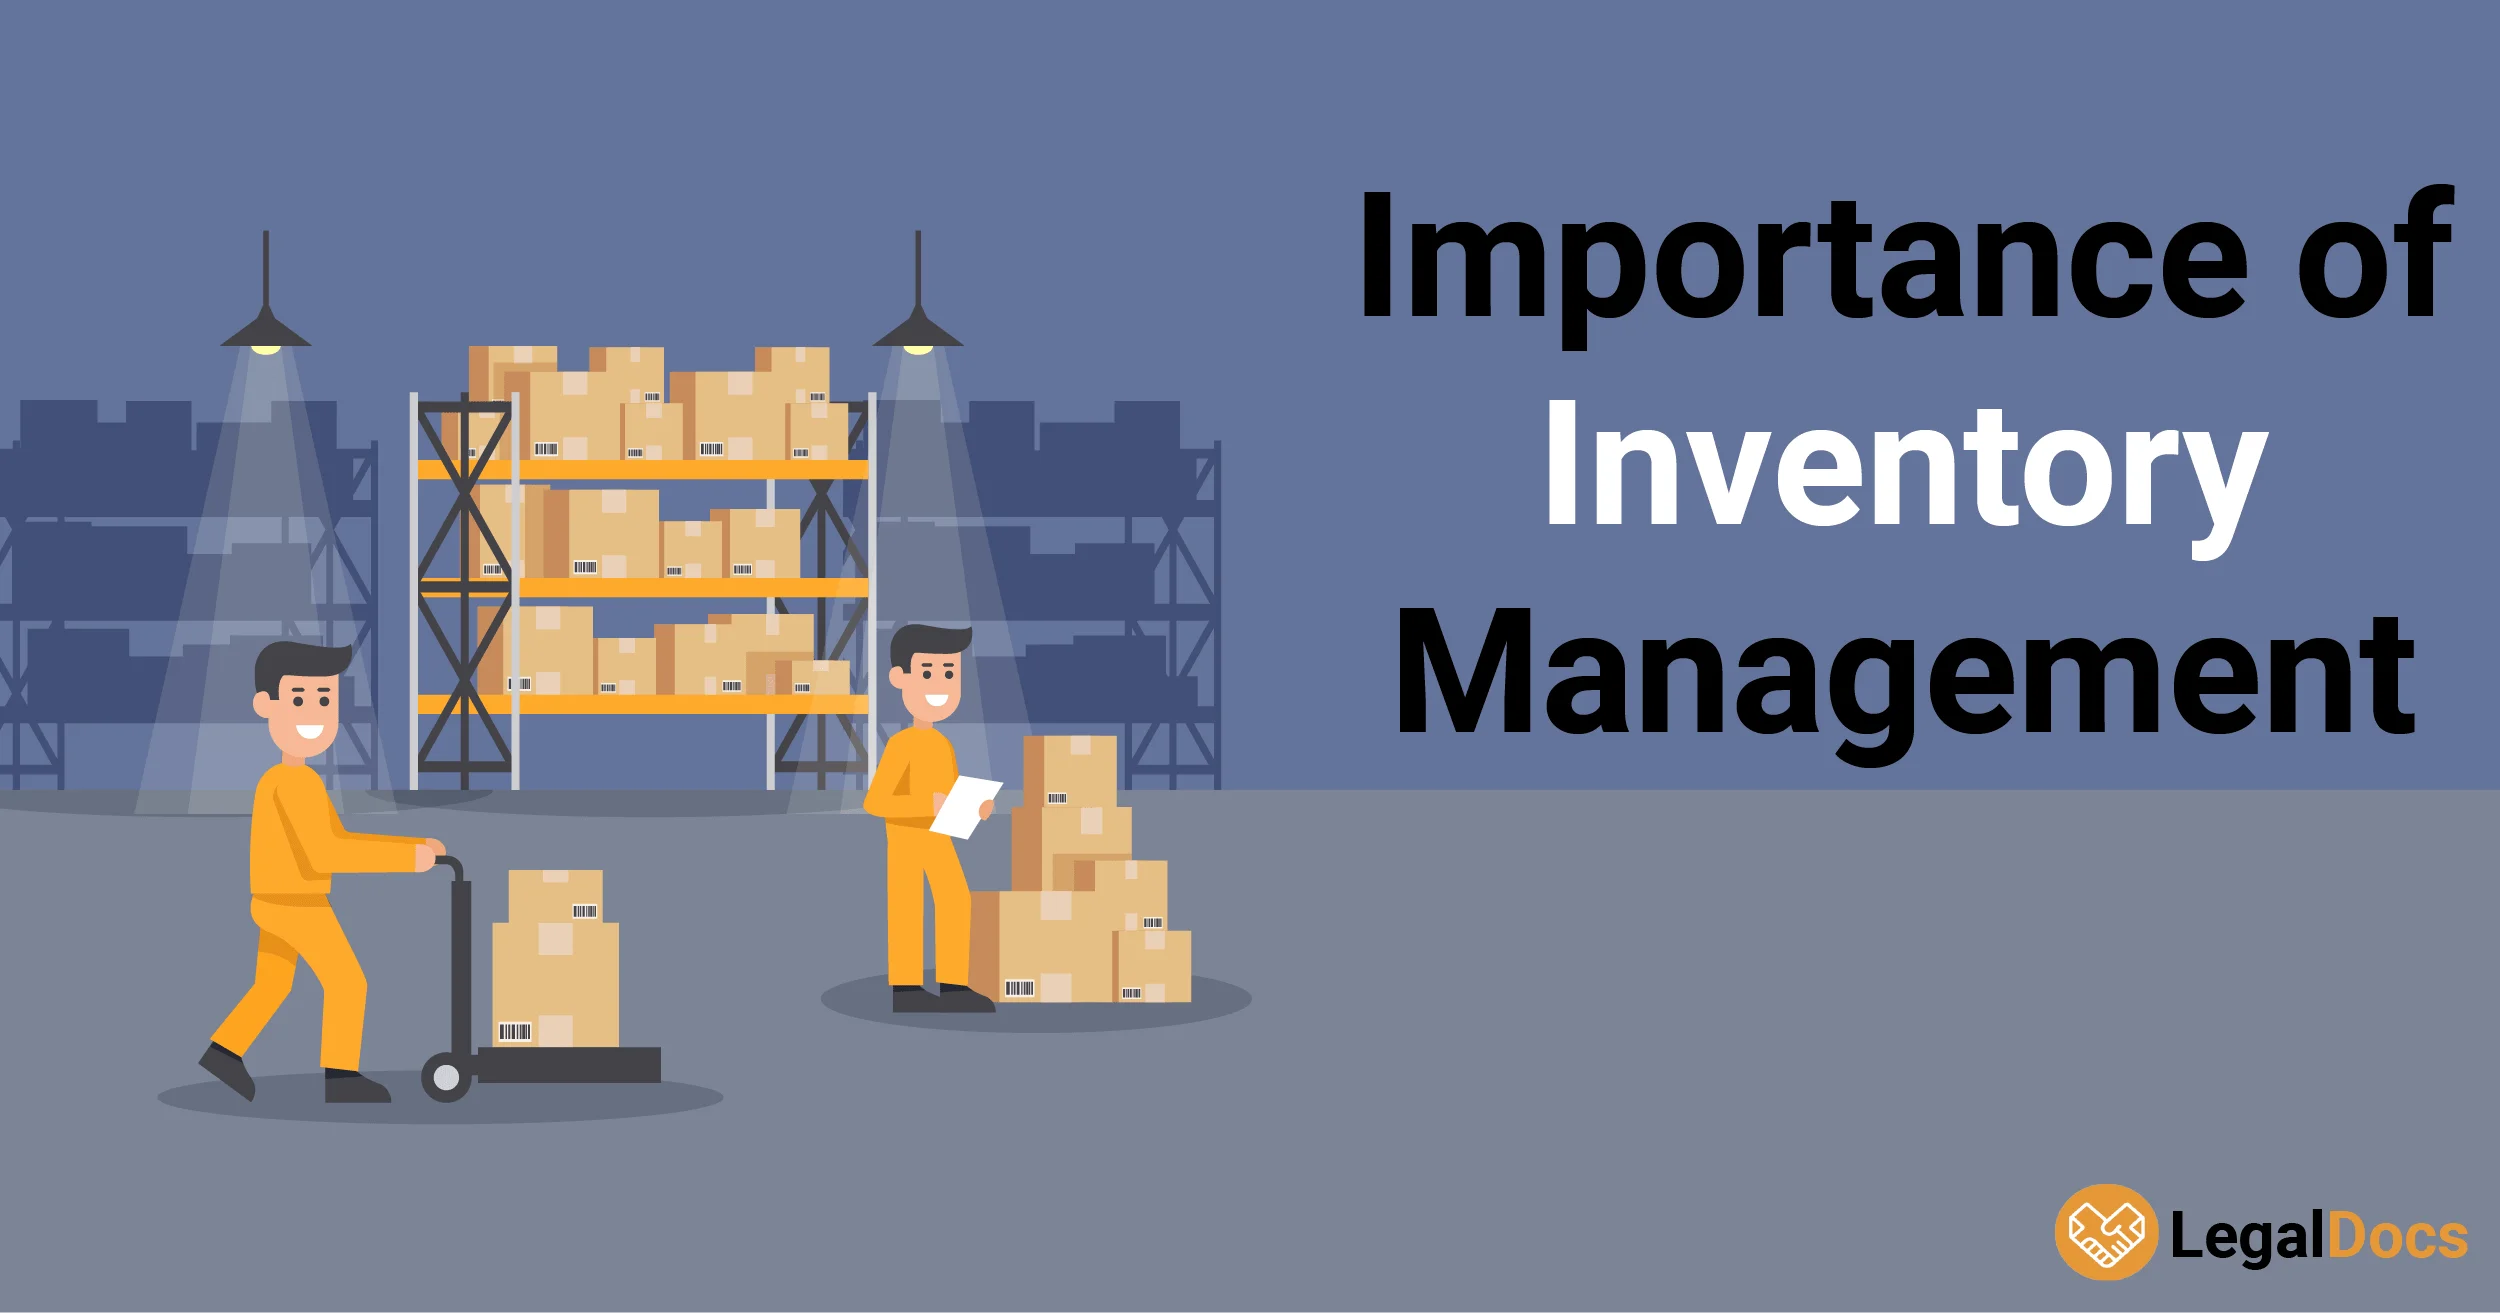 Importance of Inventory Management - LegalDocs